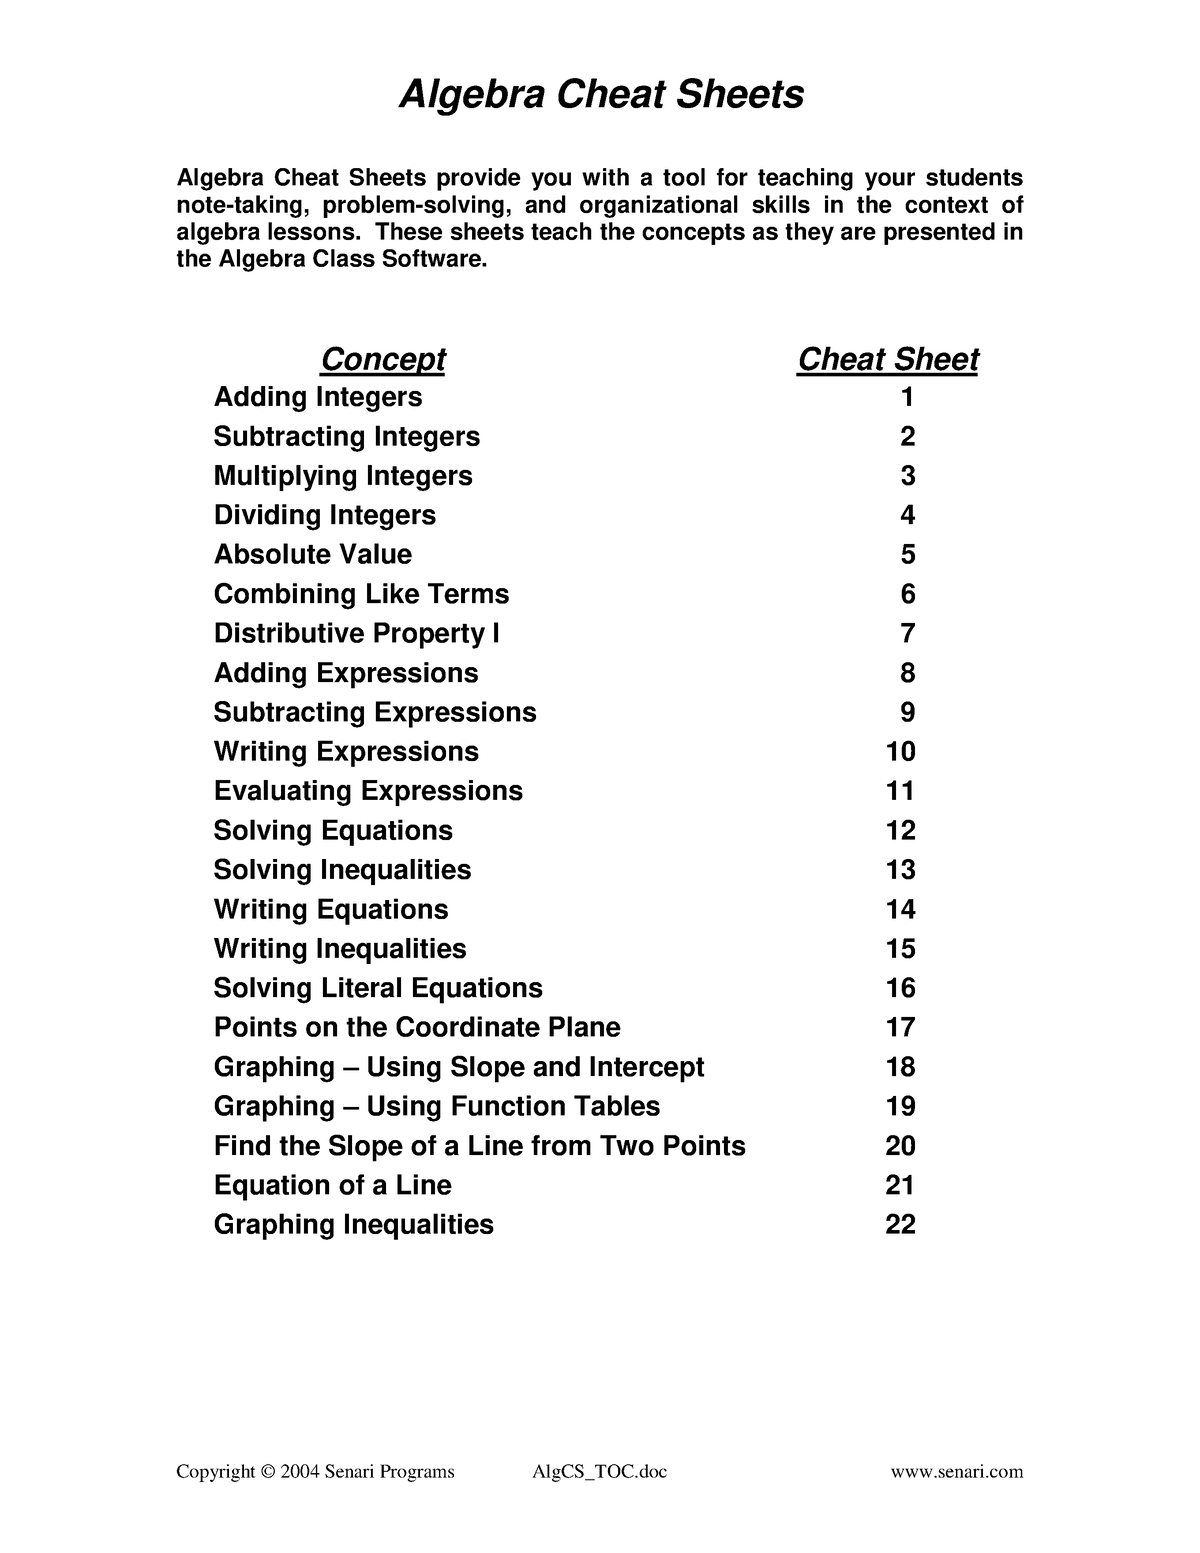 math-cheat-sheets-ngenn-algebra-cheat-sheets-copyright-2004